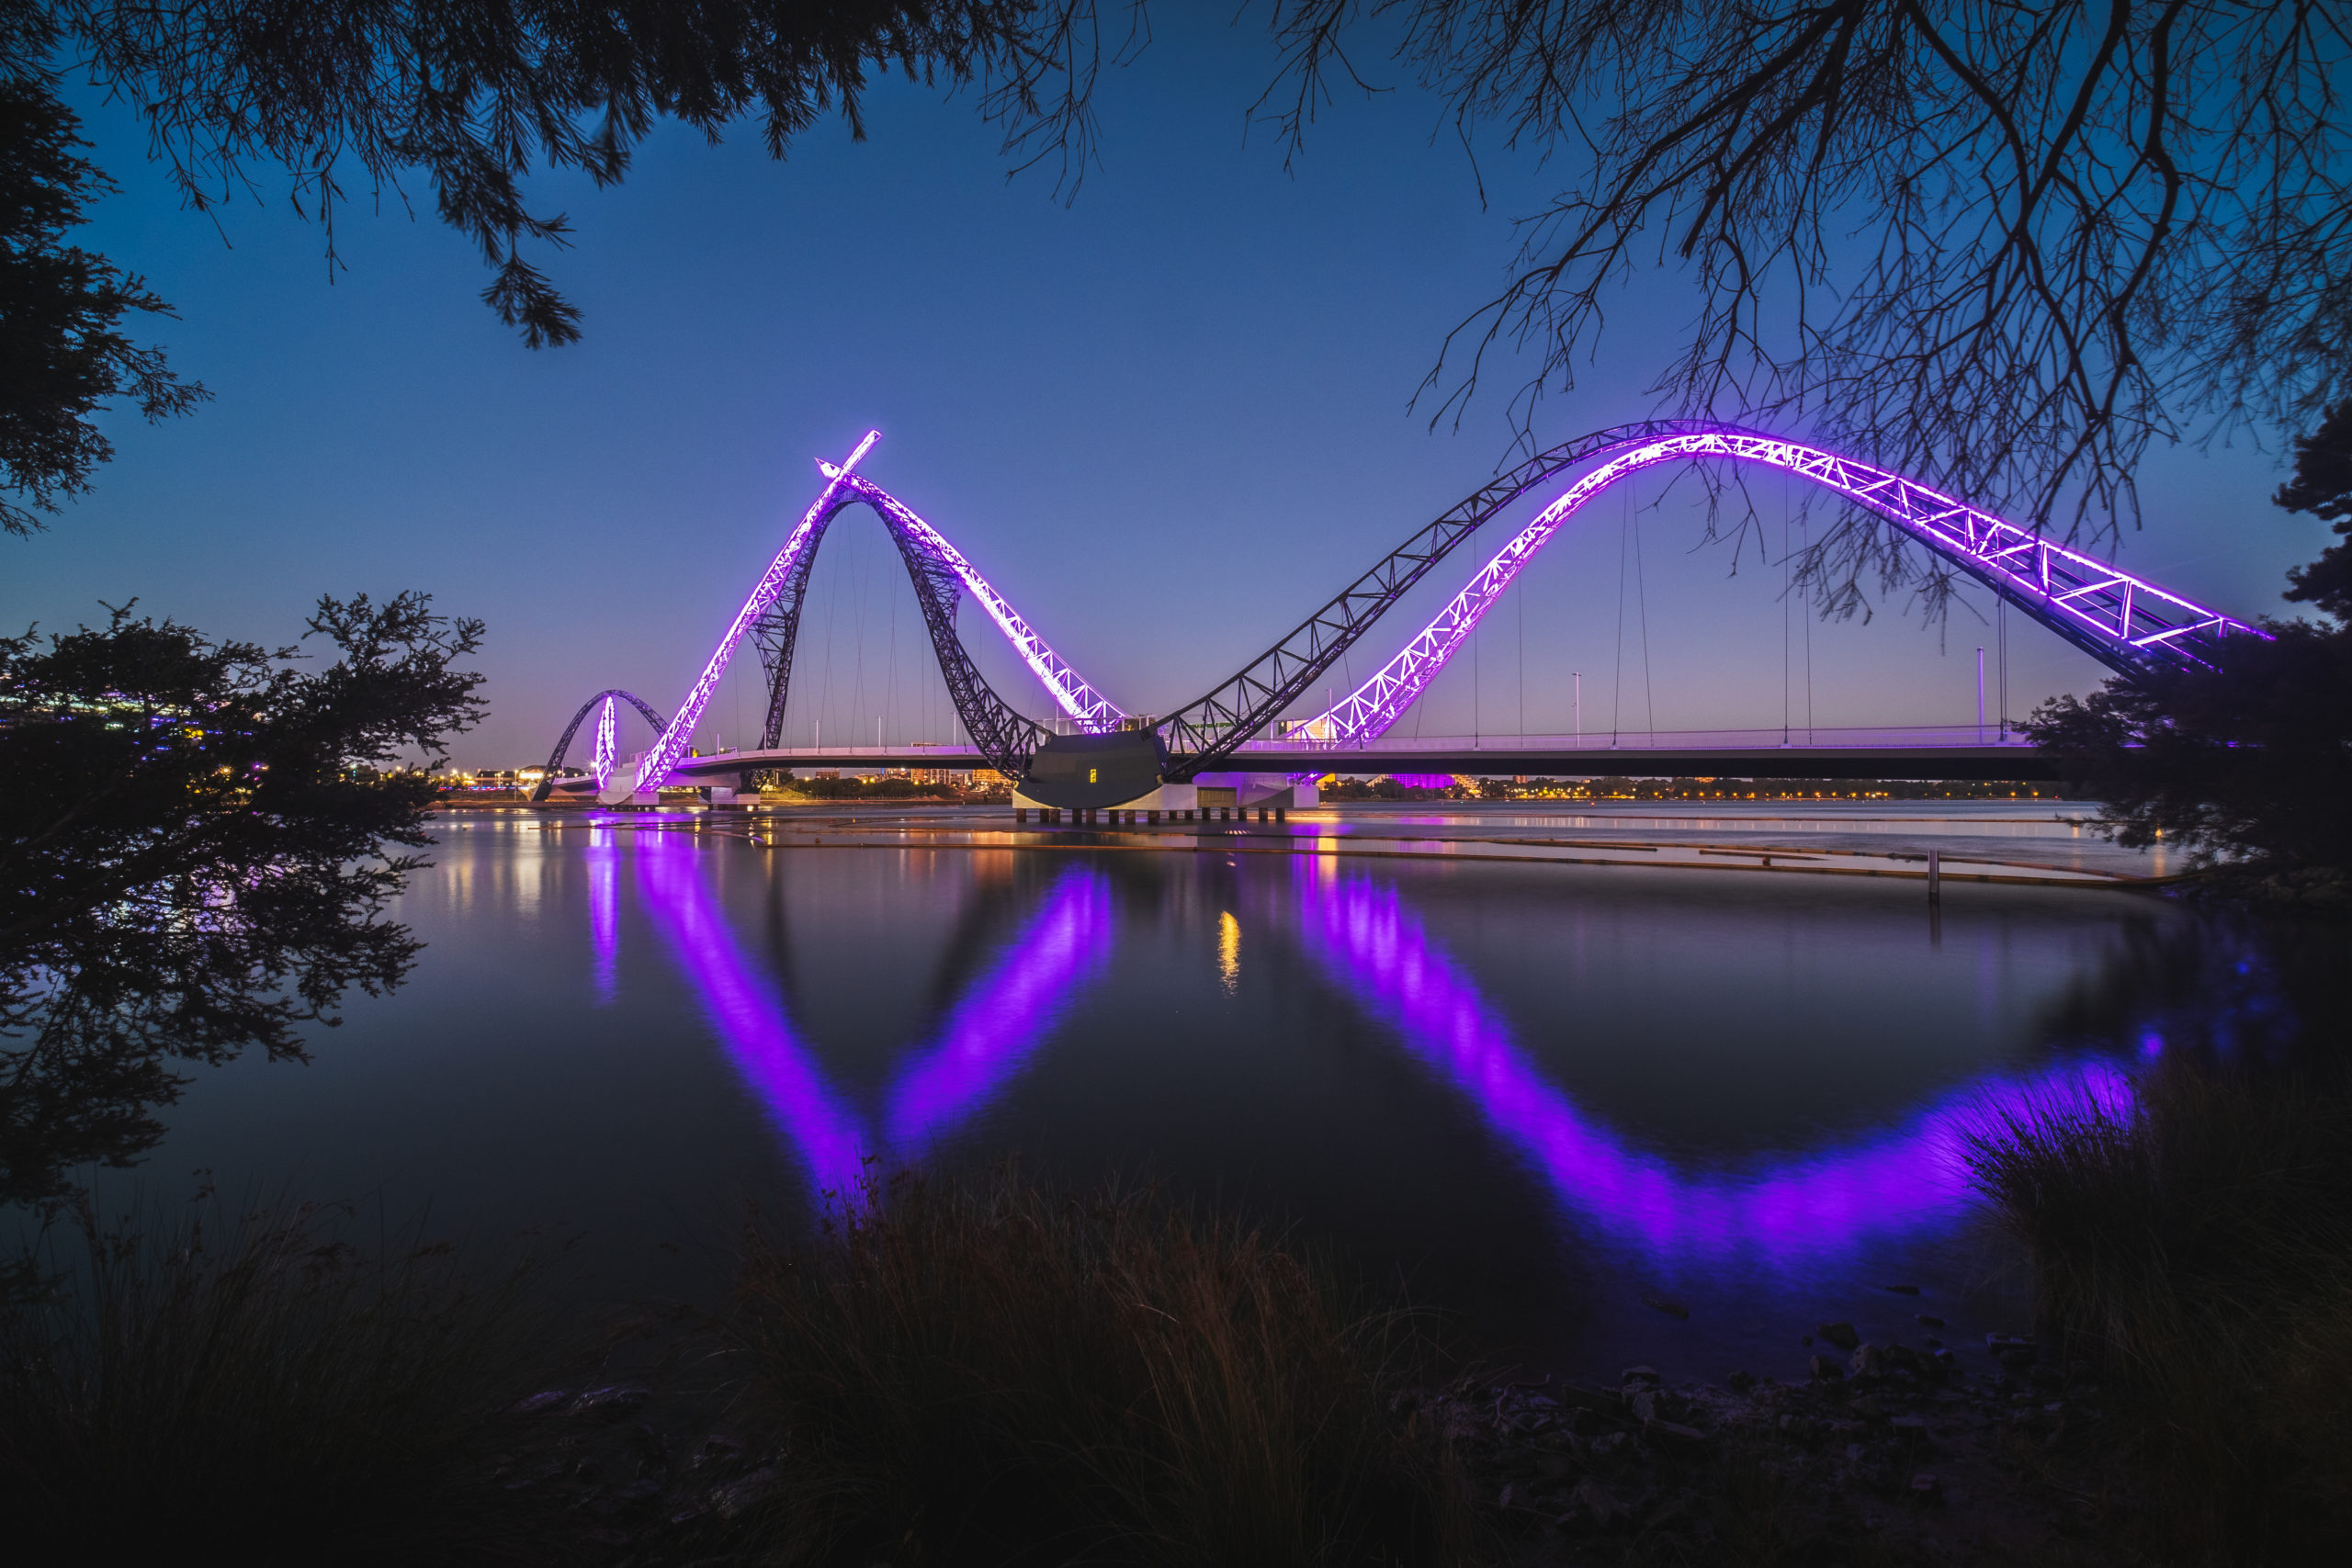 Matagarup Bridge in the evening with purple lights, Perth WA